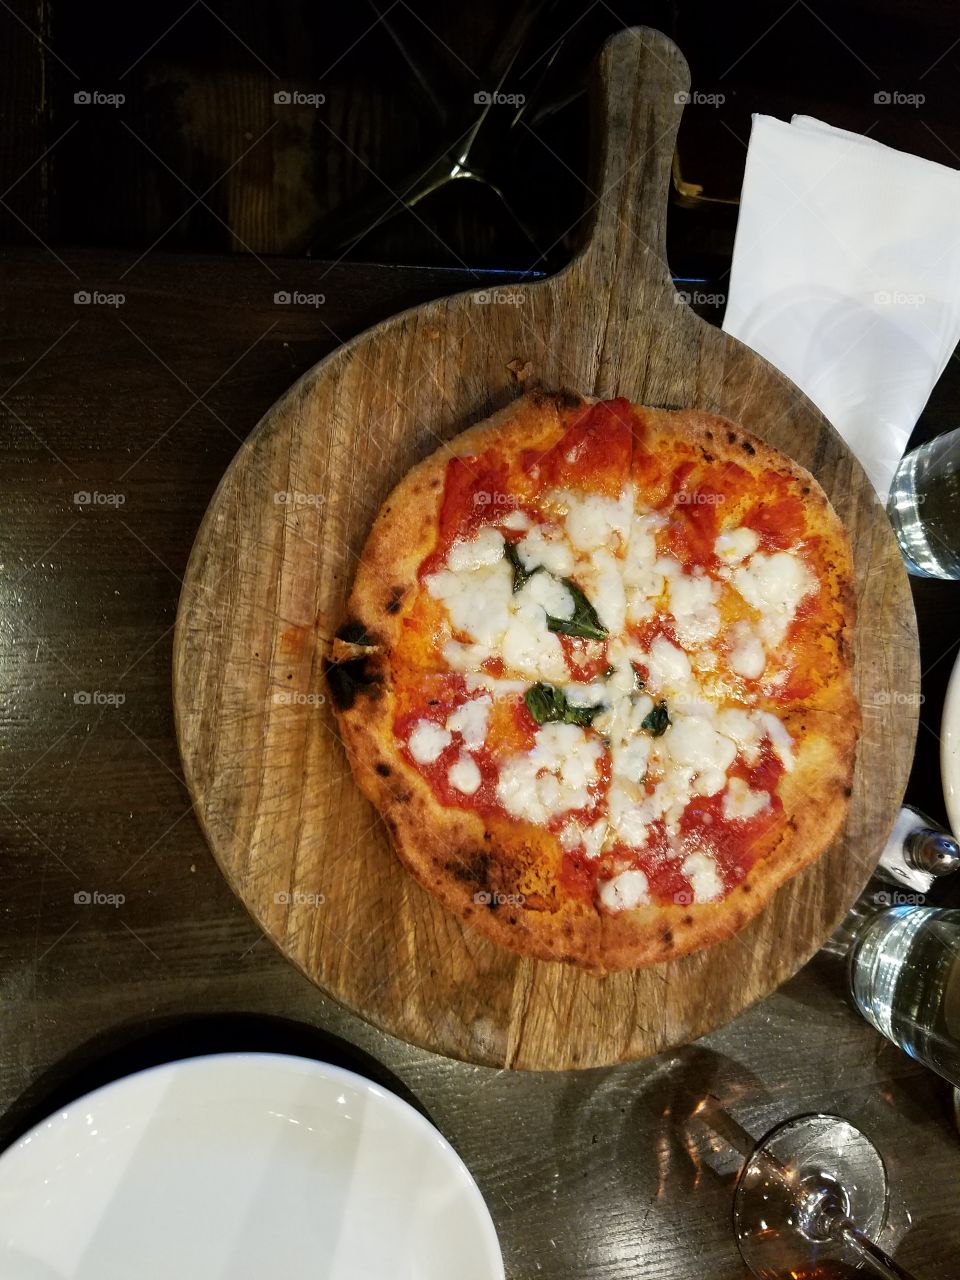 BEST Pizza in new york